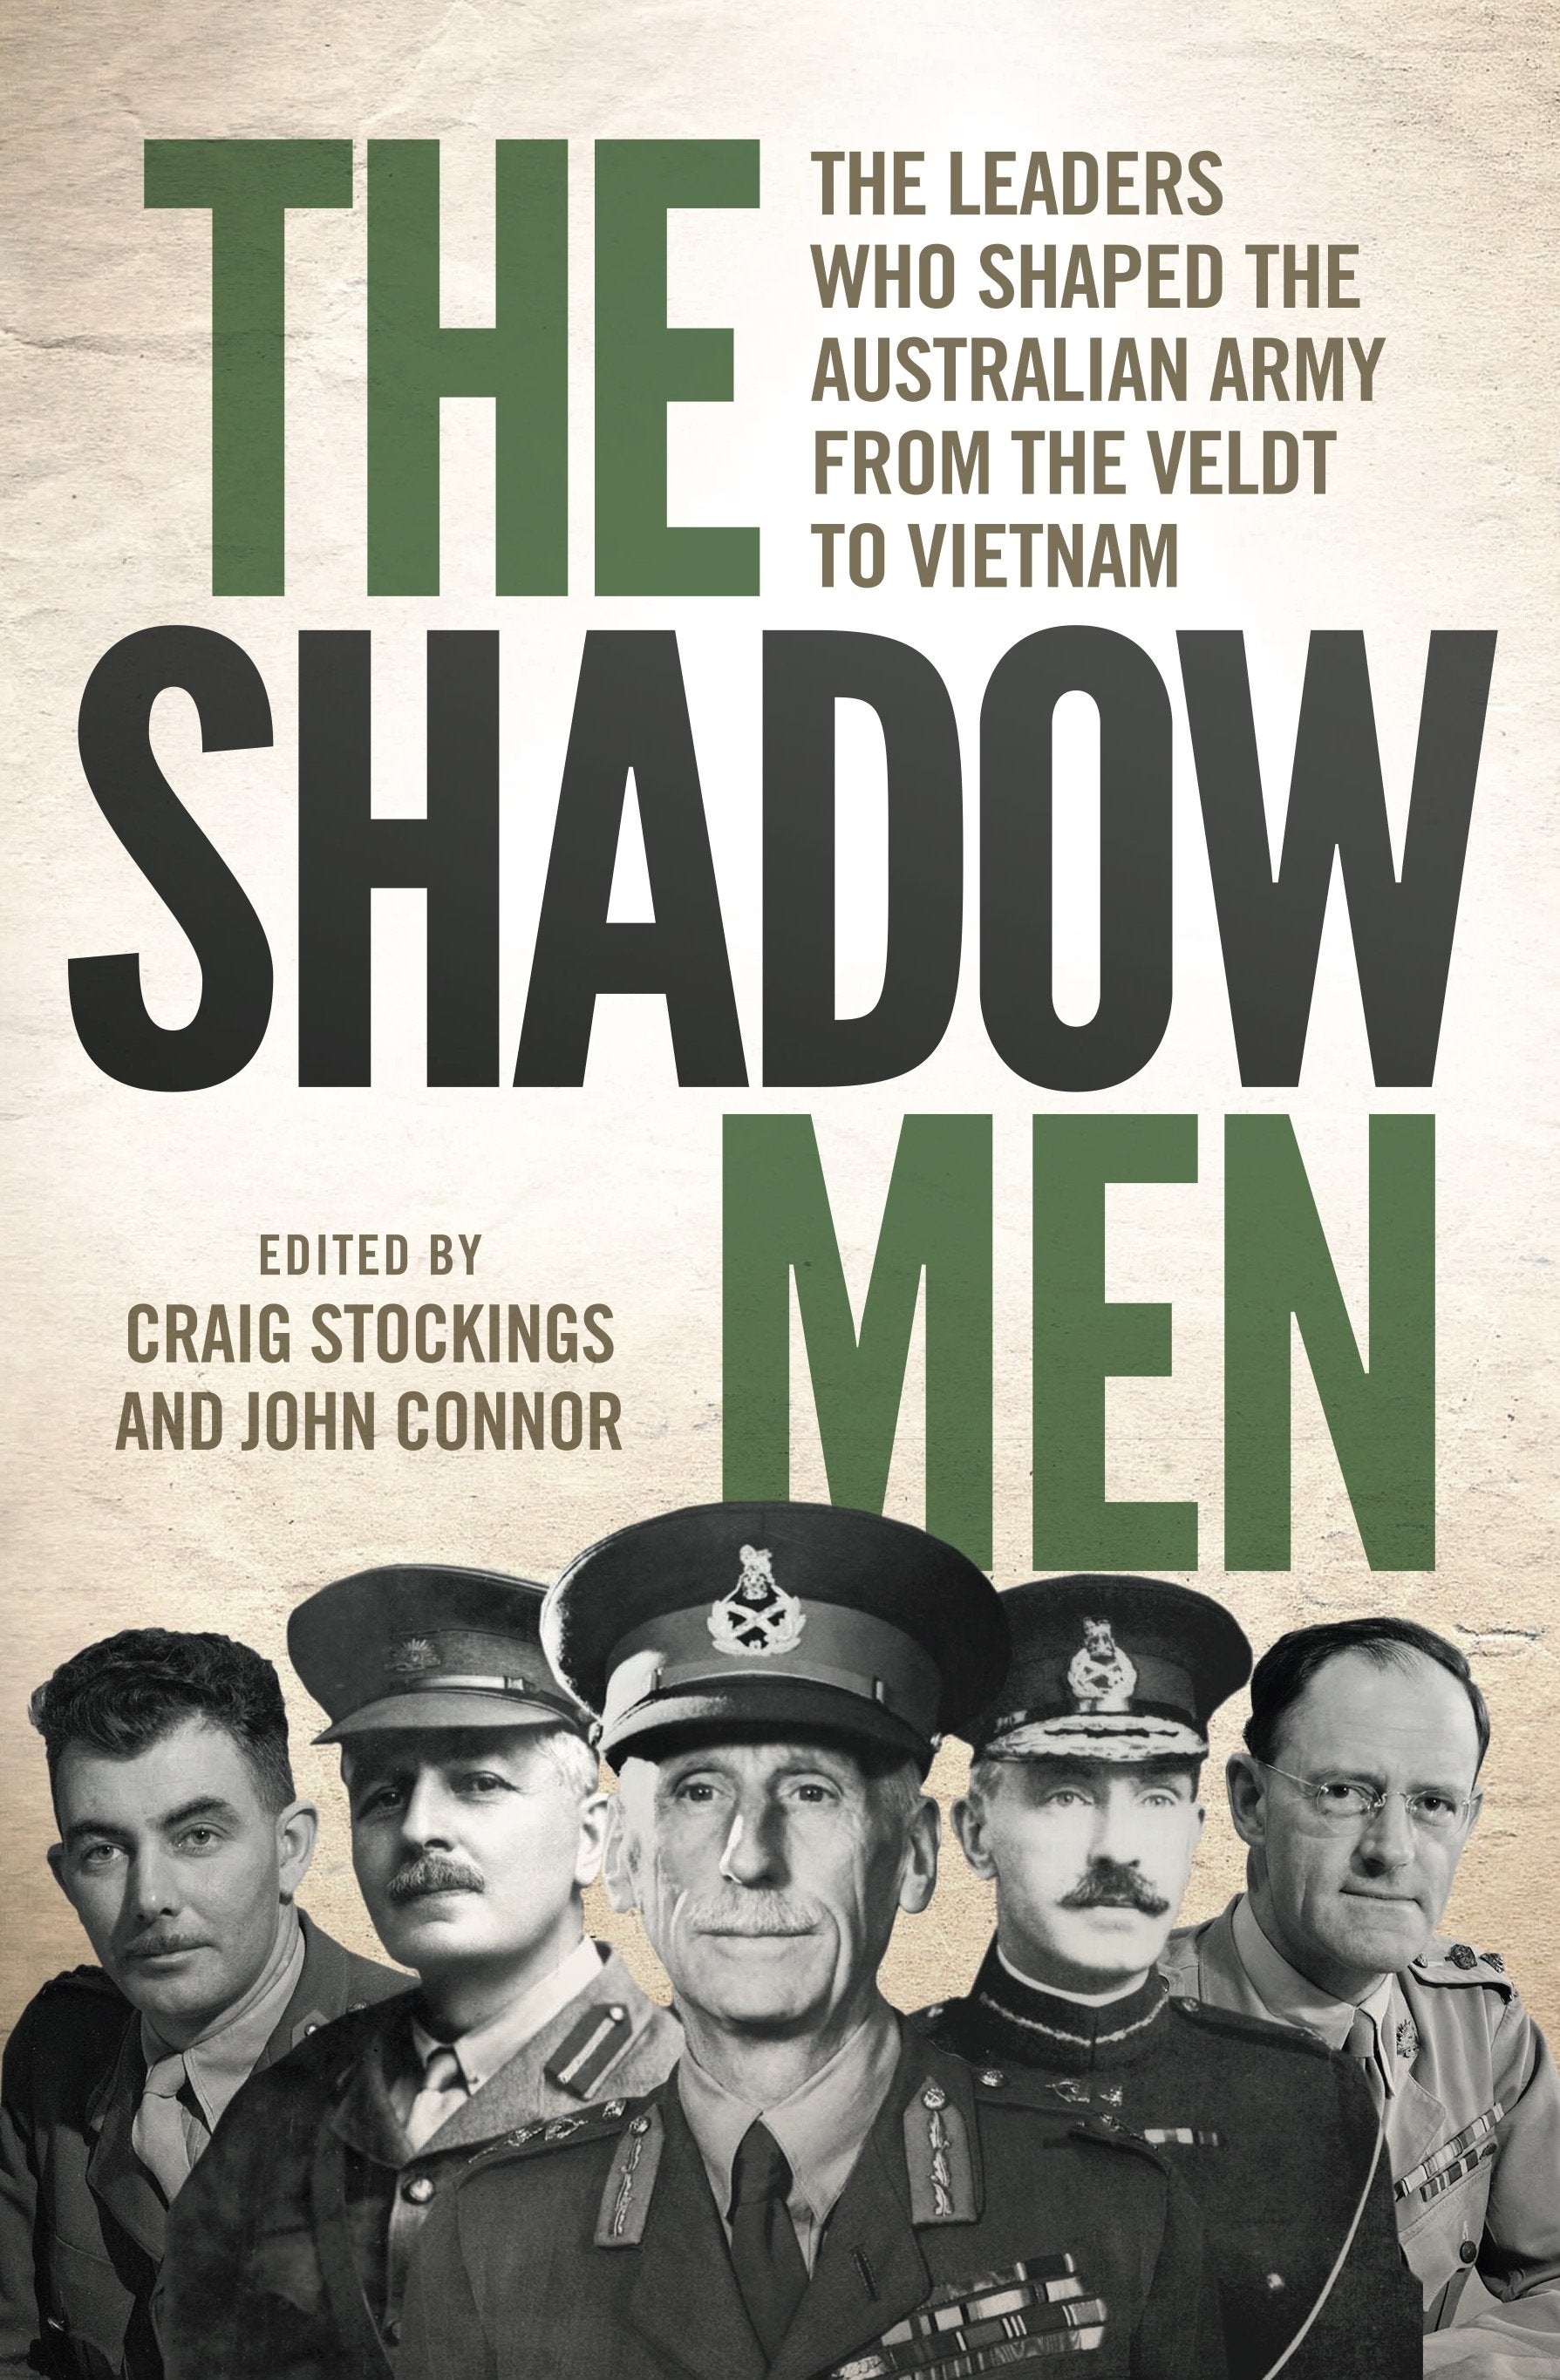 The shadow men